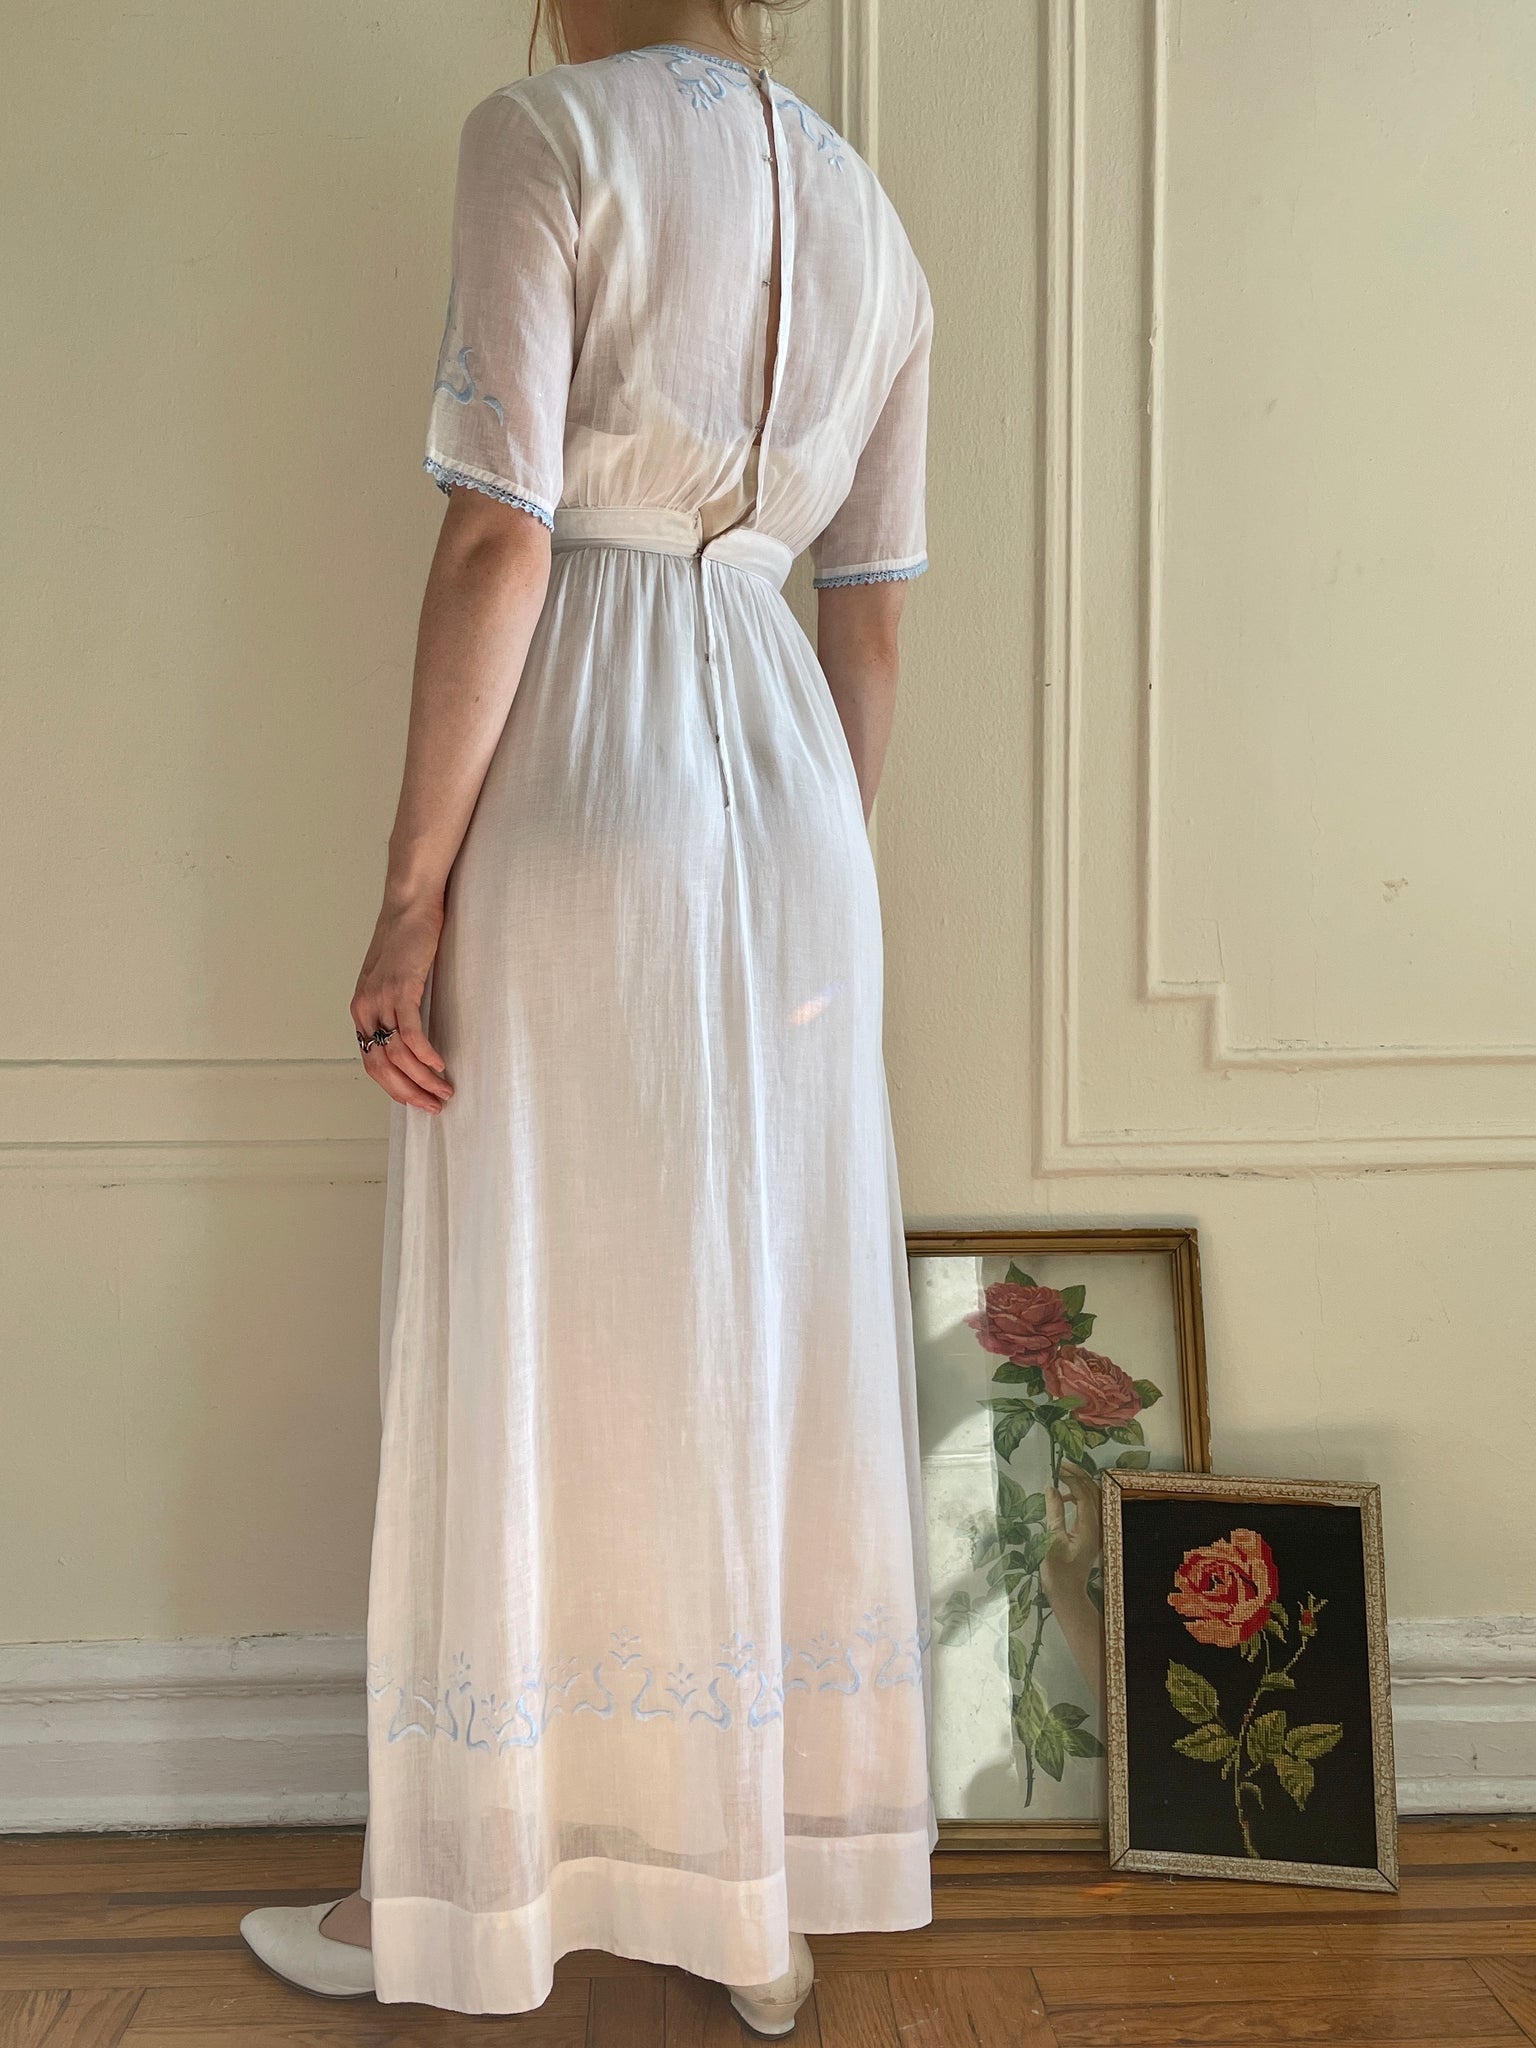 1910s Blue Embroidered Short Sleeve White Cotton Wedding Bridal Dress